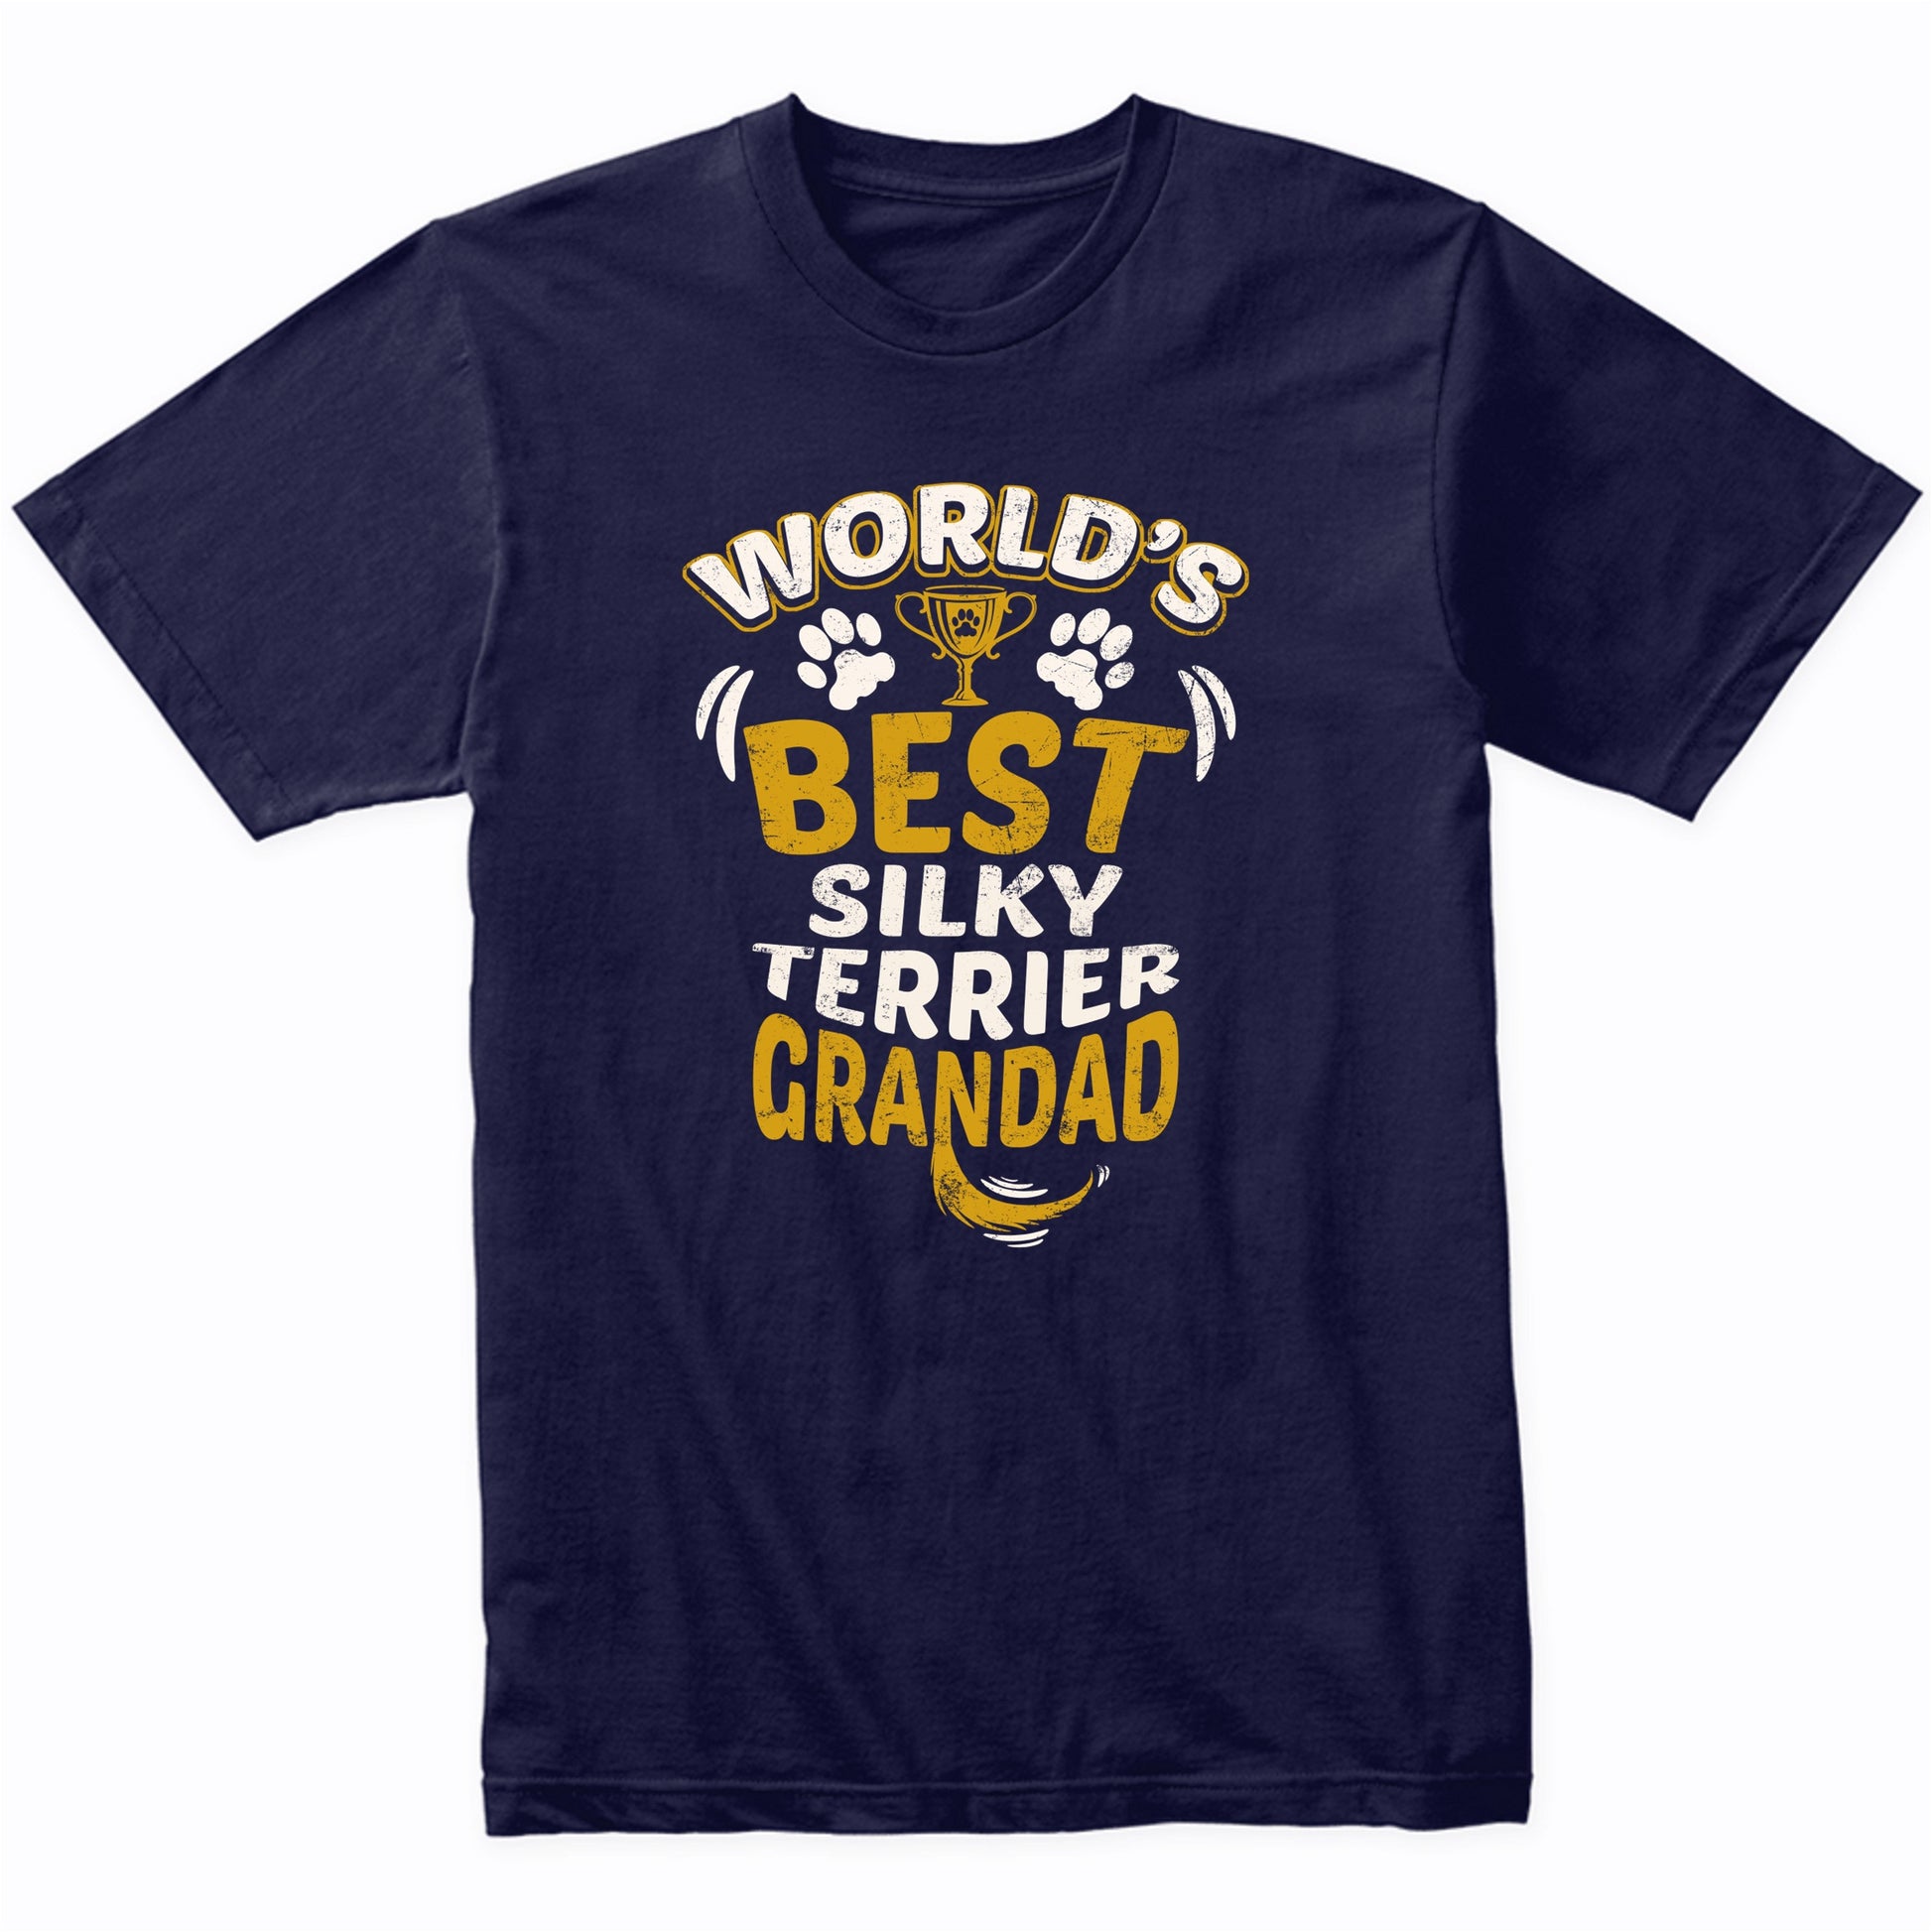 World's Best Silky Terrier Grandad Graphic T-Shirt